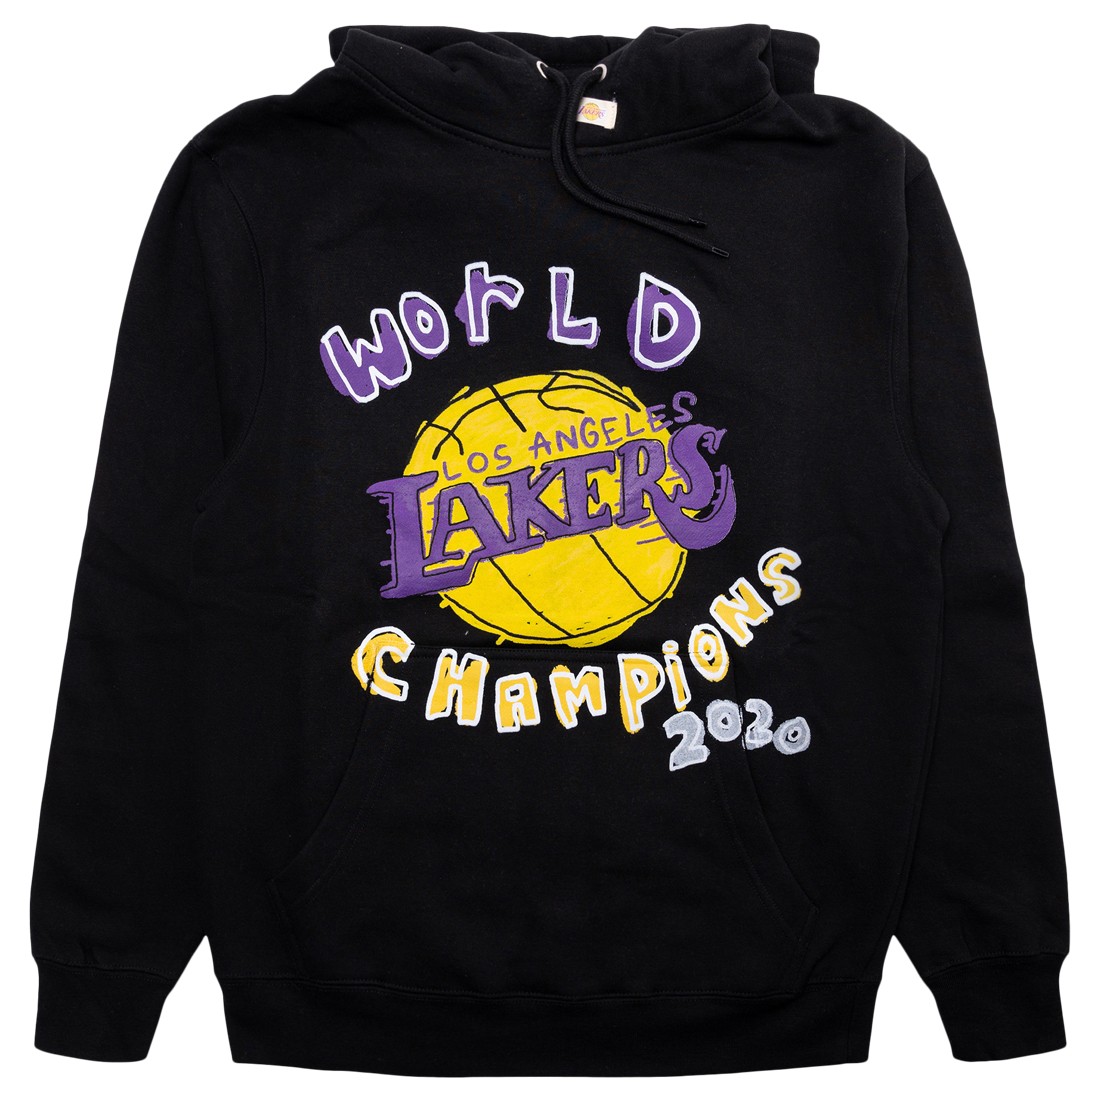 Los Angeles Lakers Champion Cartoon nike logo shirt, hoodie